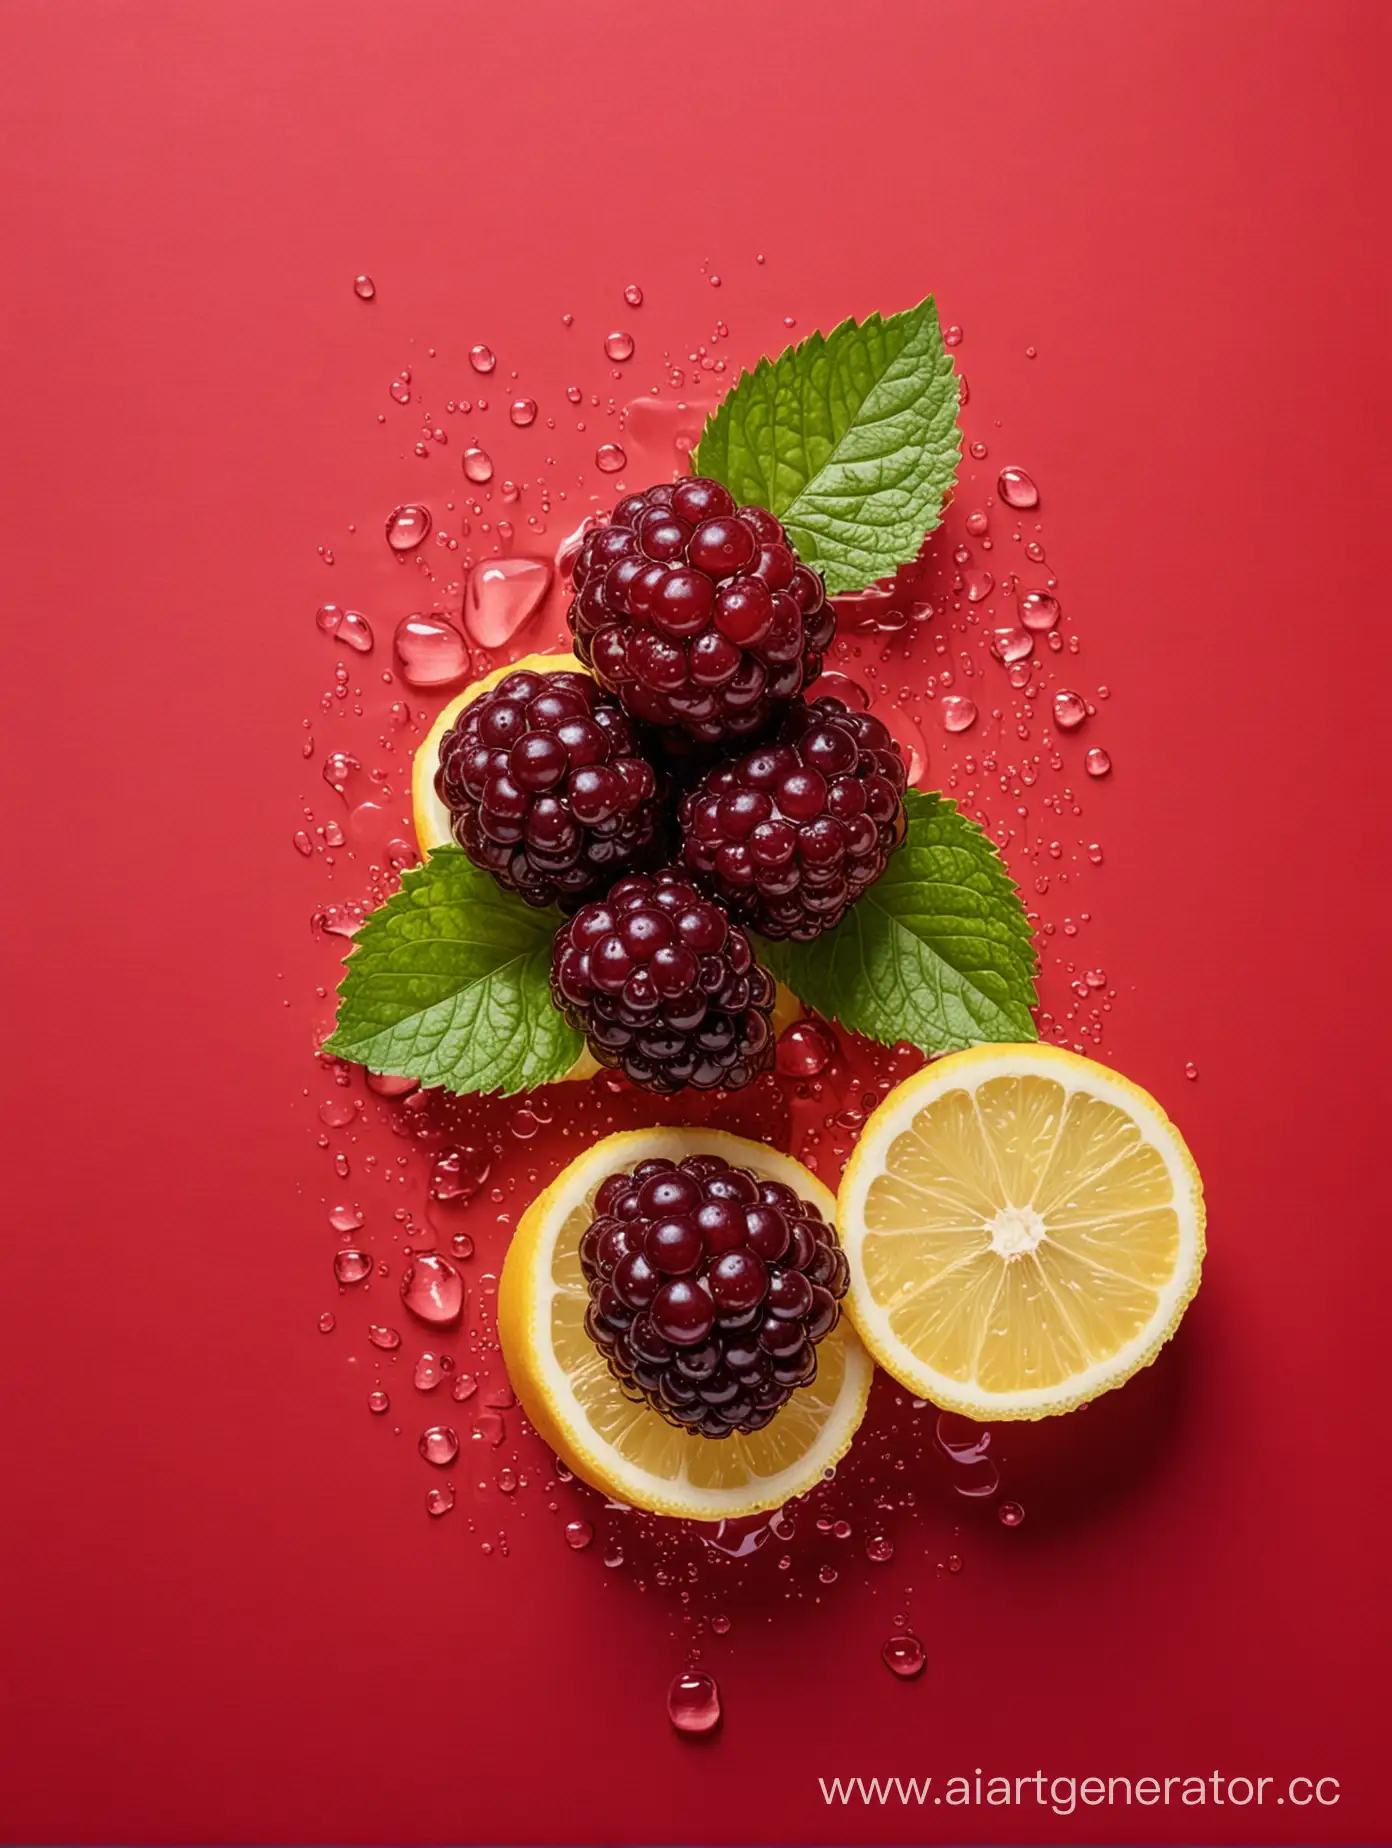 Boysenberry-and-Lemon-Slices-on-Vibrant-Red-Background